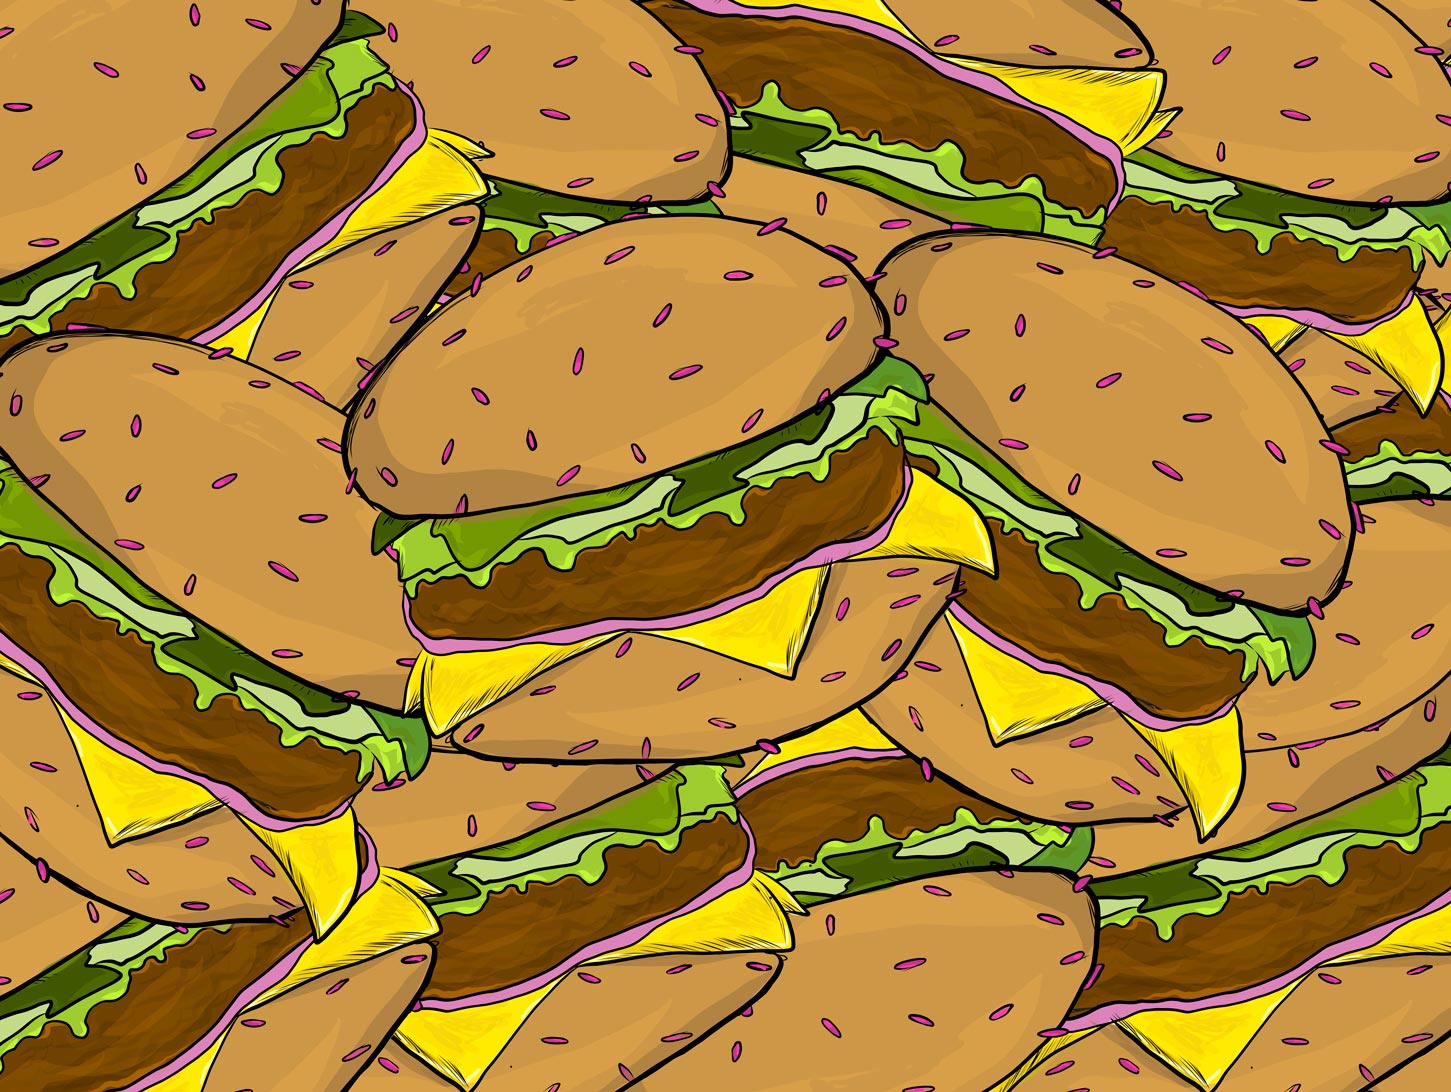 Brainoon Burger - Juna Lawrence - Brainoon - Friendmade.fm - digital food art illustration - pop art inspired